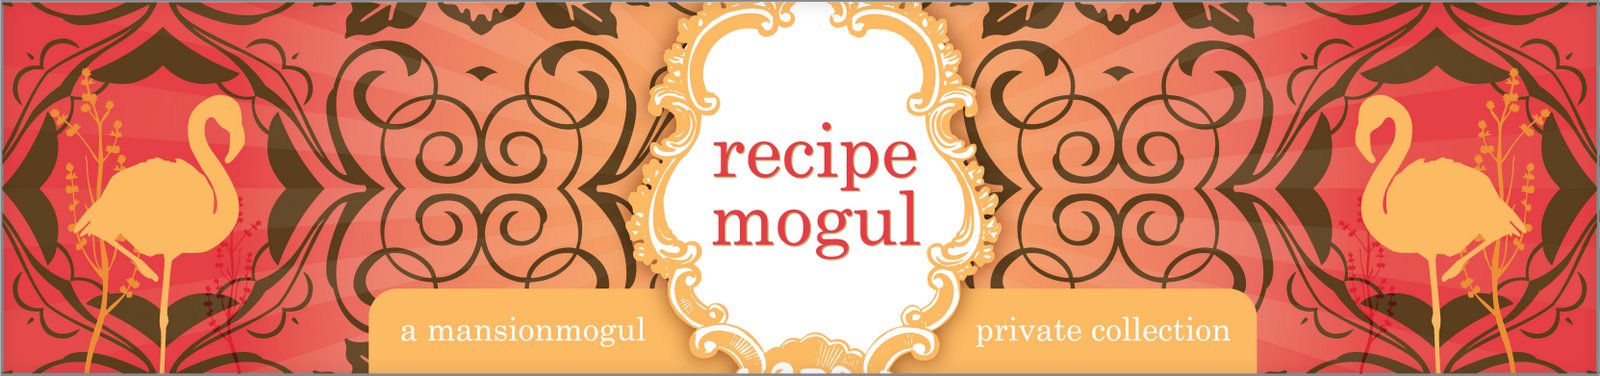 recipe mogul